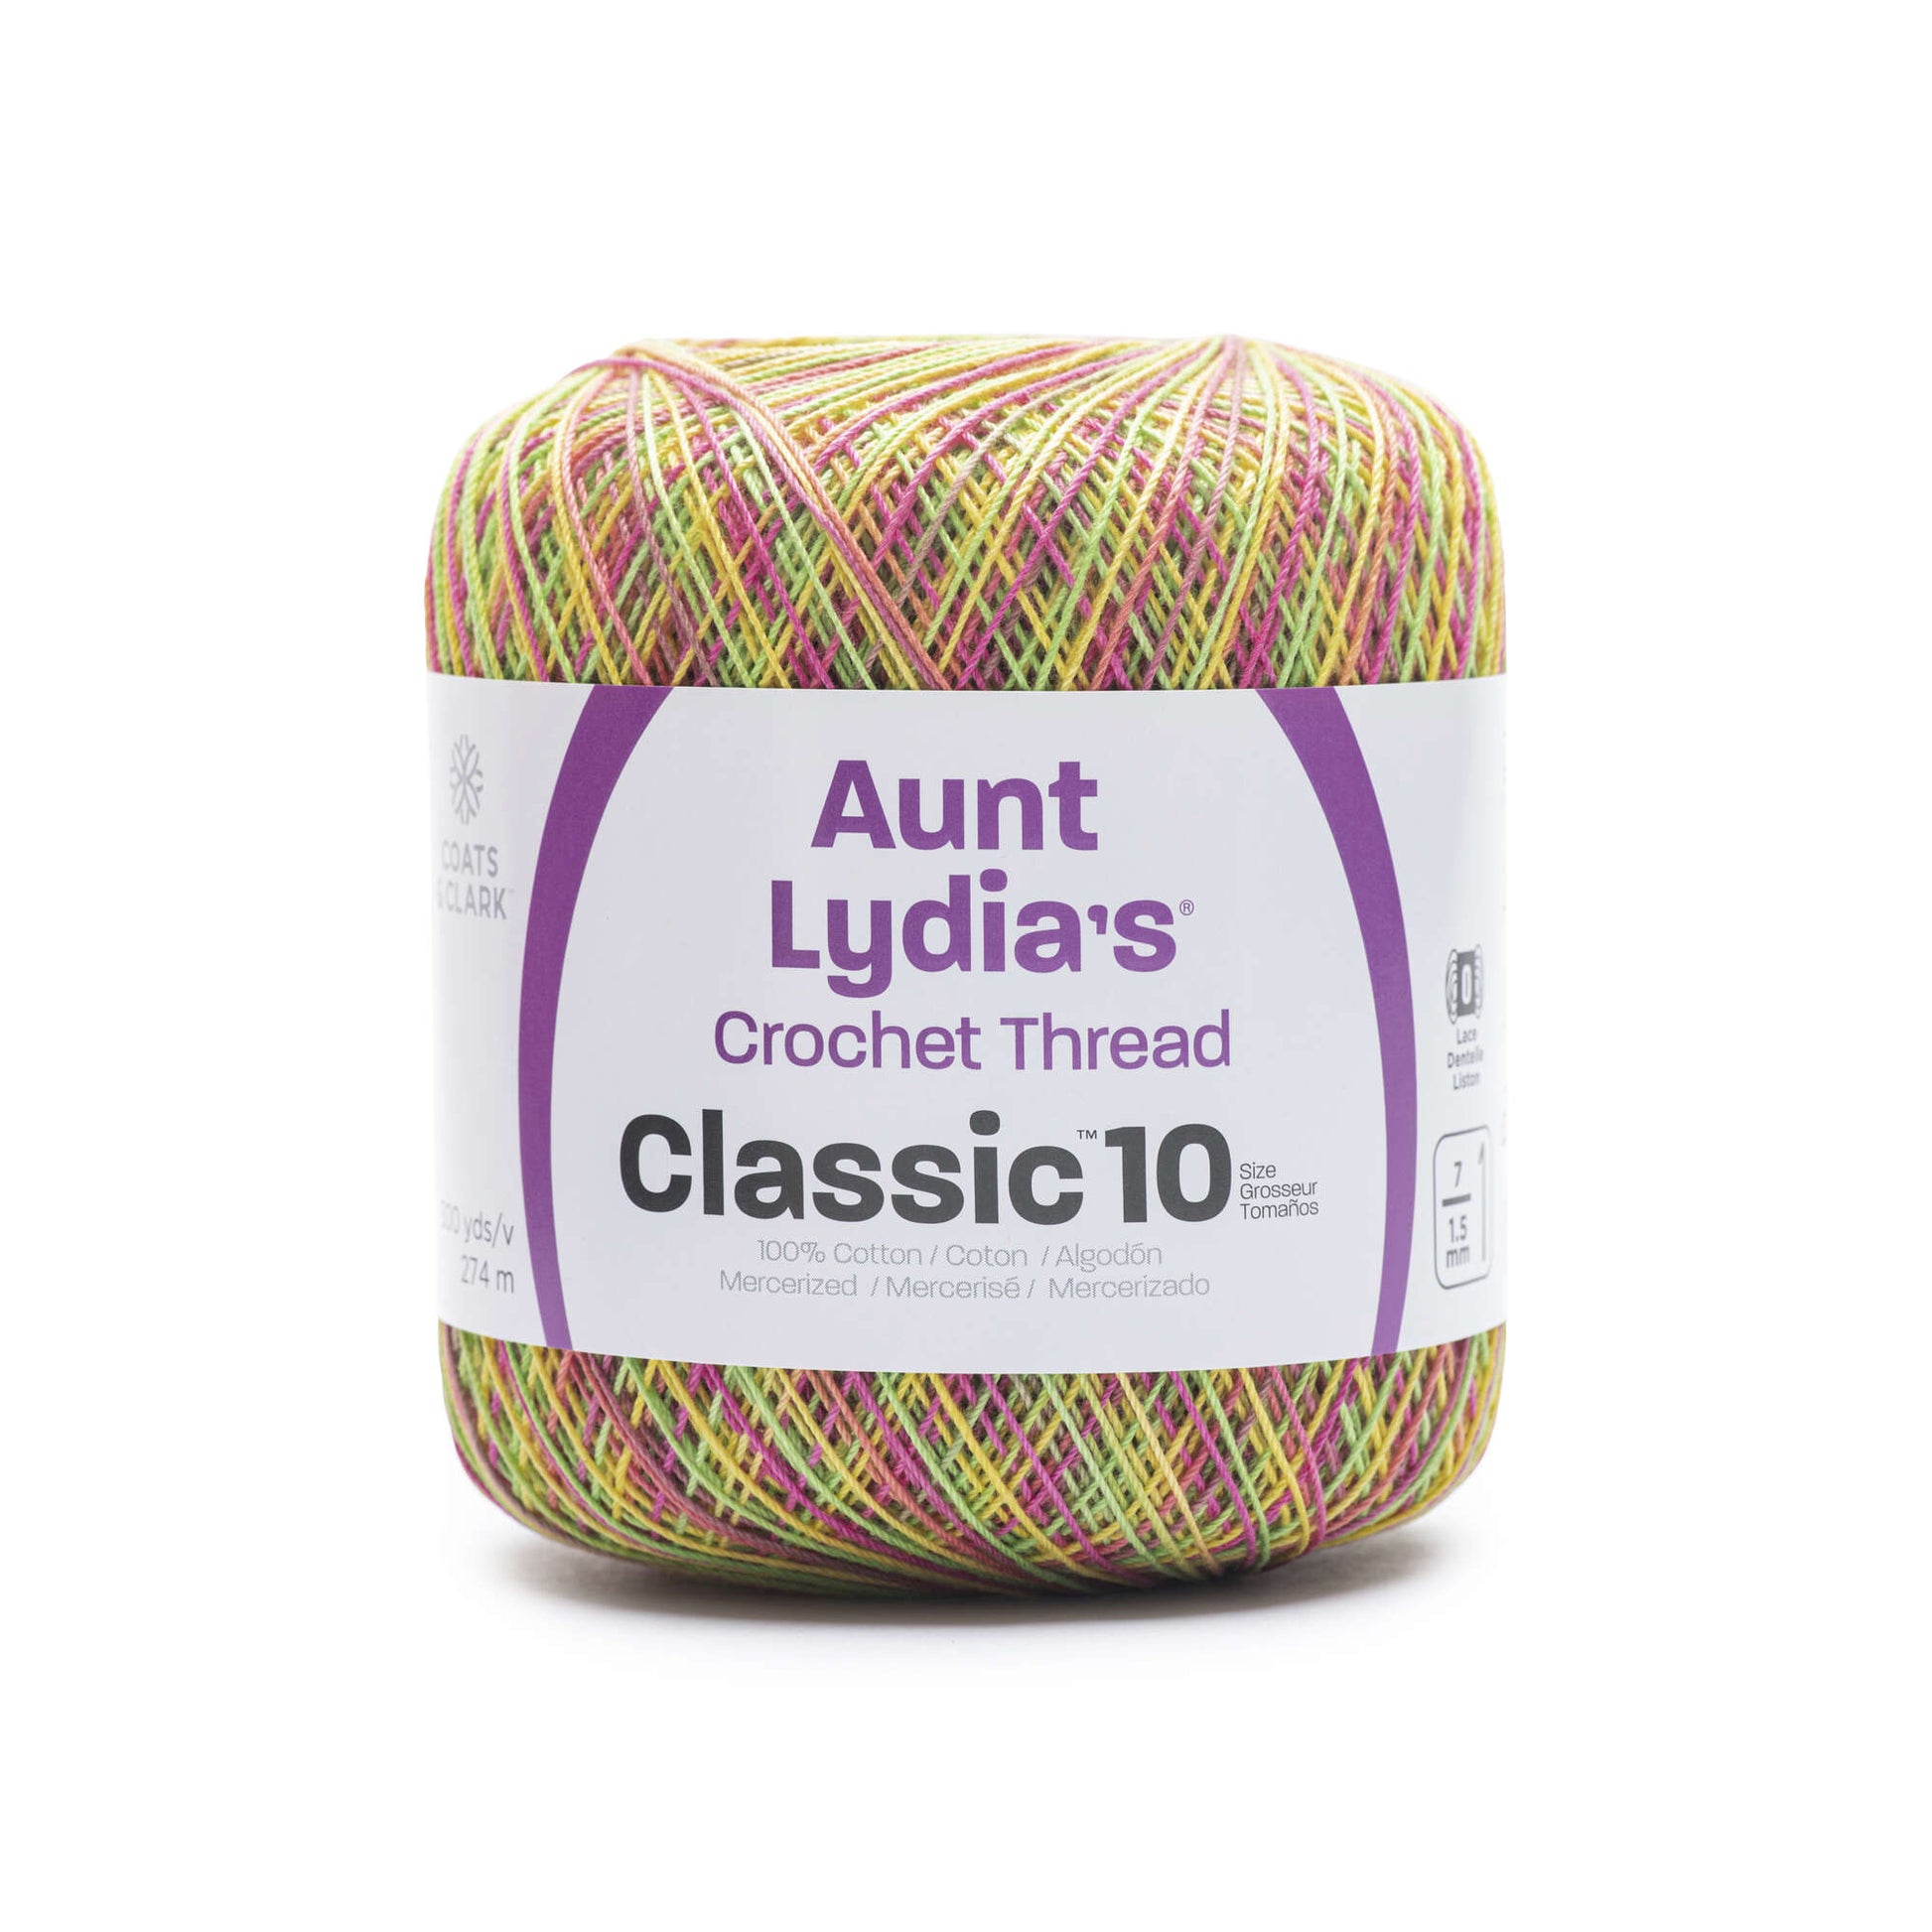 Aunt Lydia's Classic Crochet Thread Size 10 - Myrtle Green